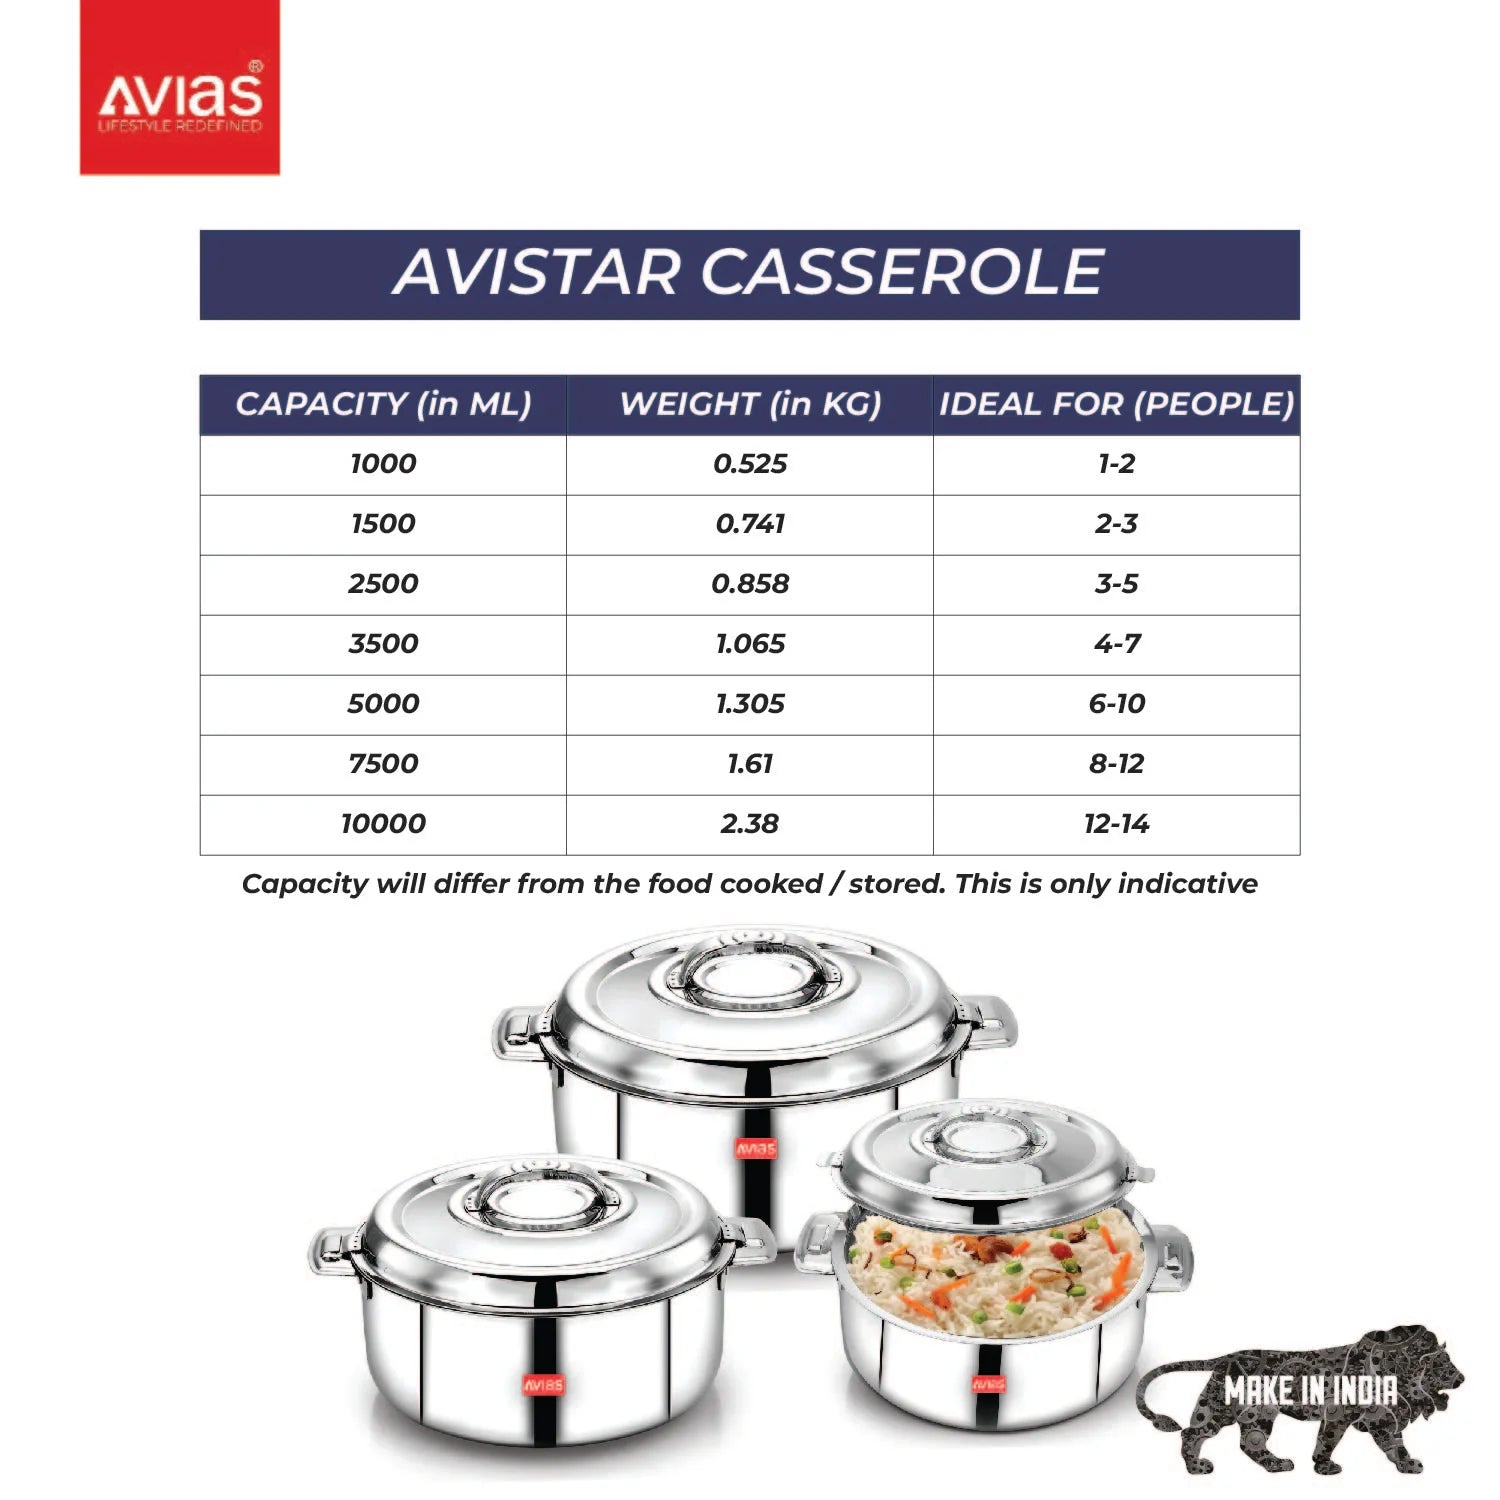 AVIAS Avistar double wall insulated stainless steel casserole